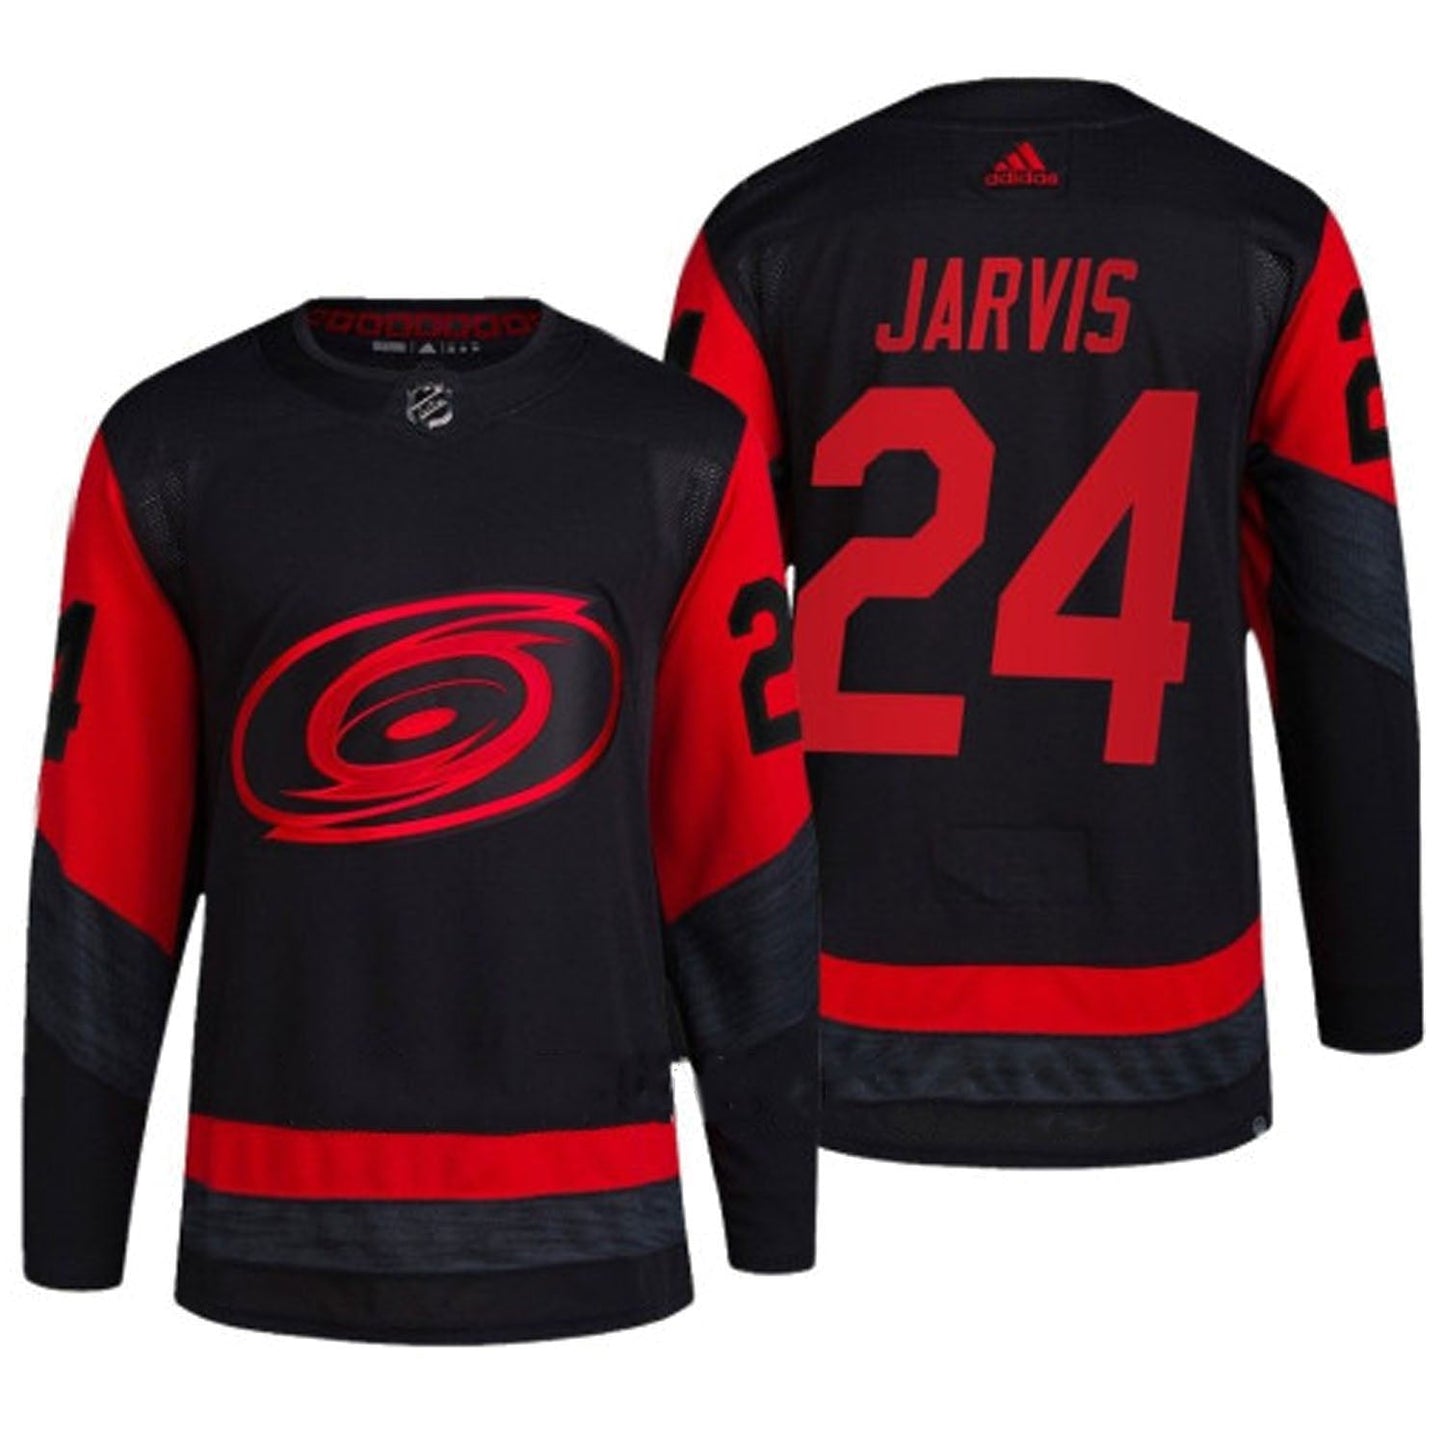 NHL Seth Jarvis Carolina Hurricanes 24 Jersey